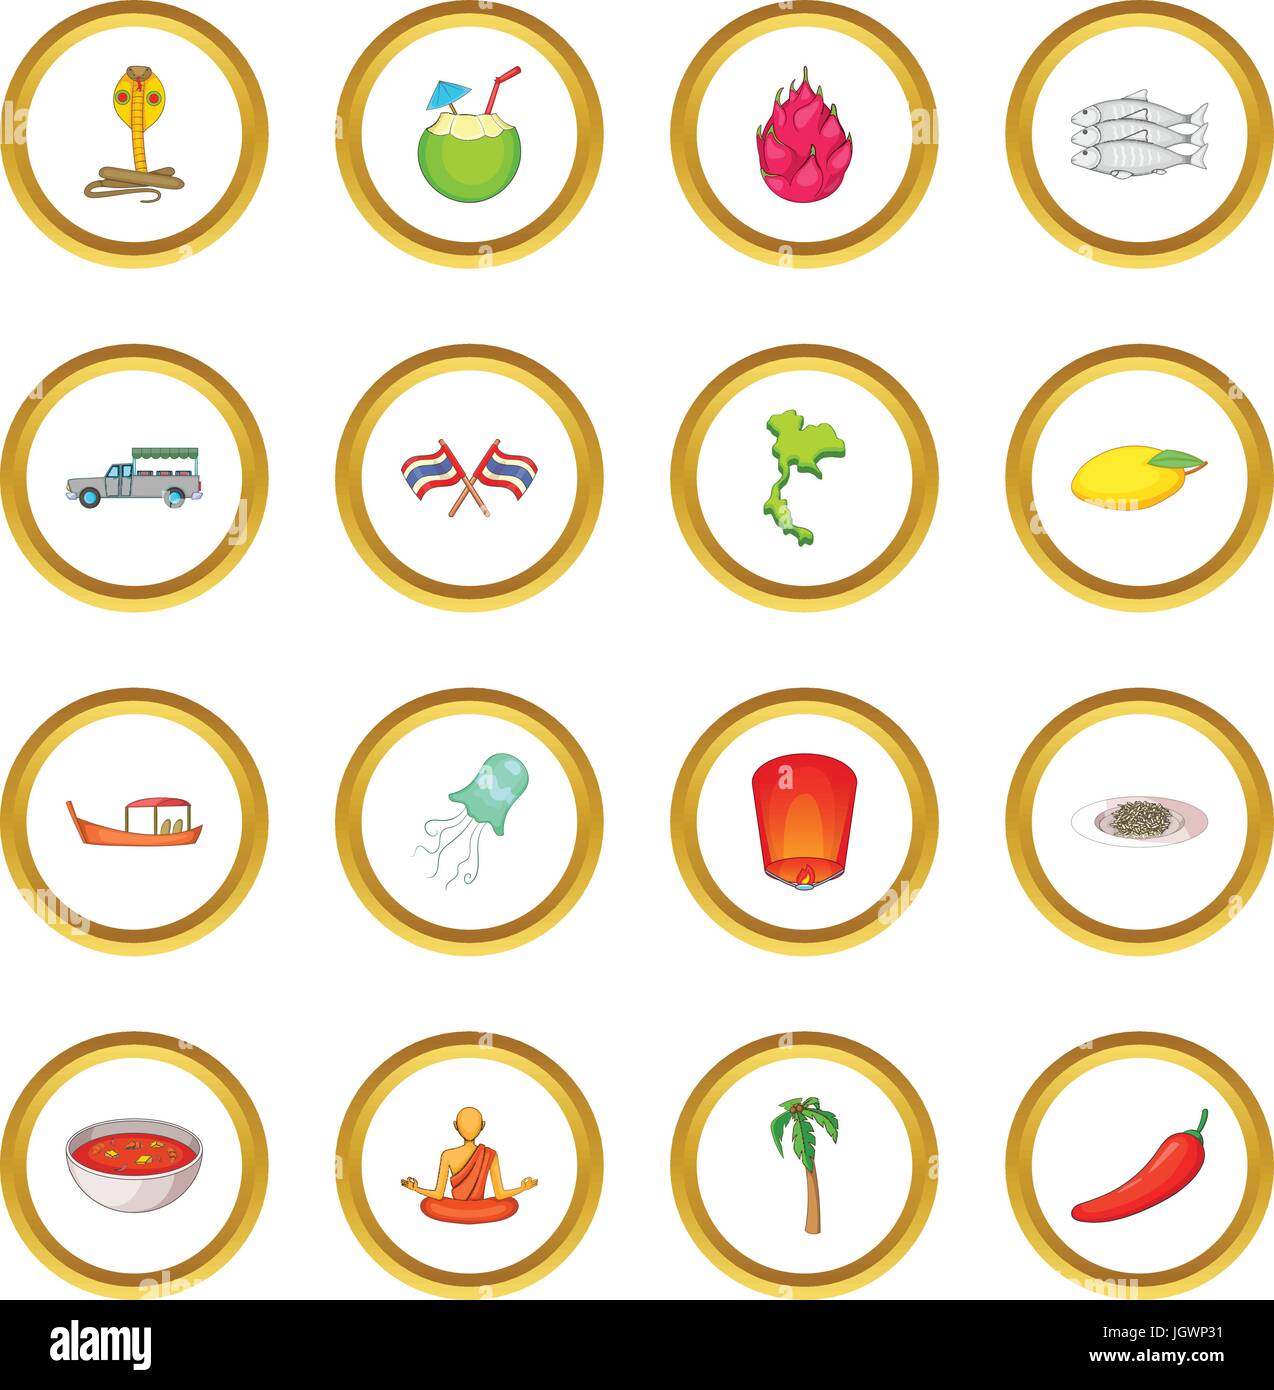 Thailand symbols icons circle Stock Vector